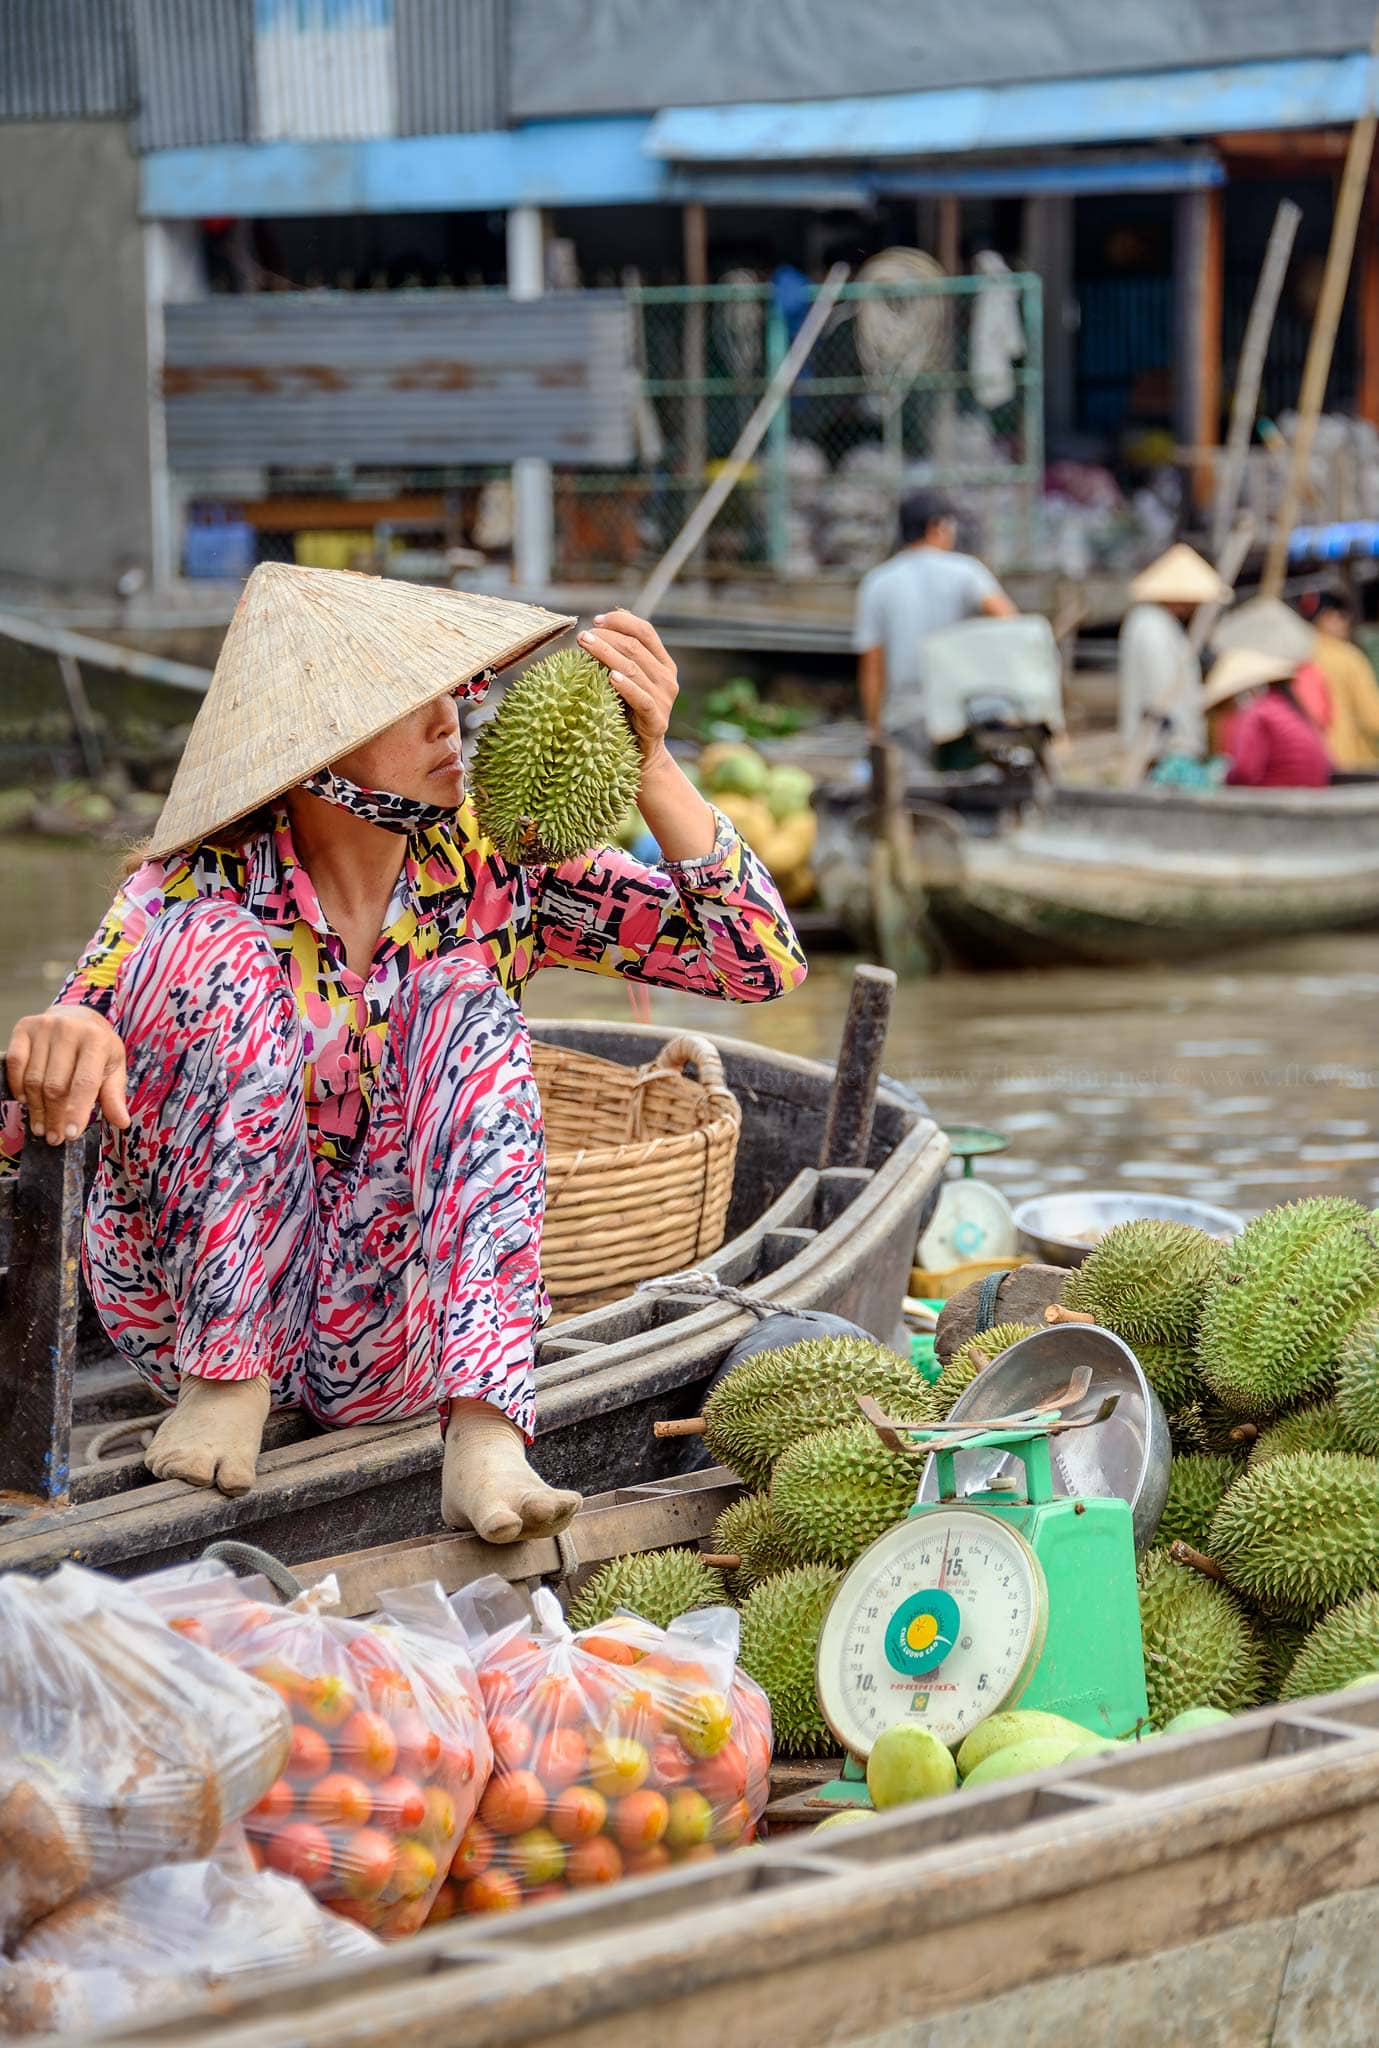 Floating market, Vietnam